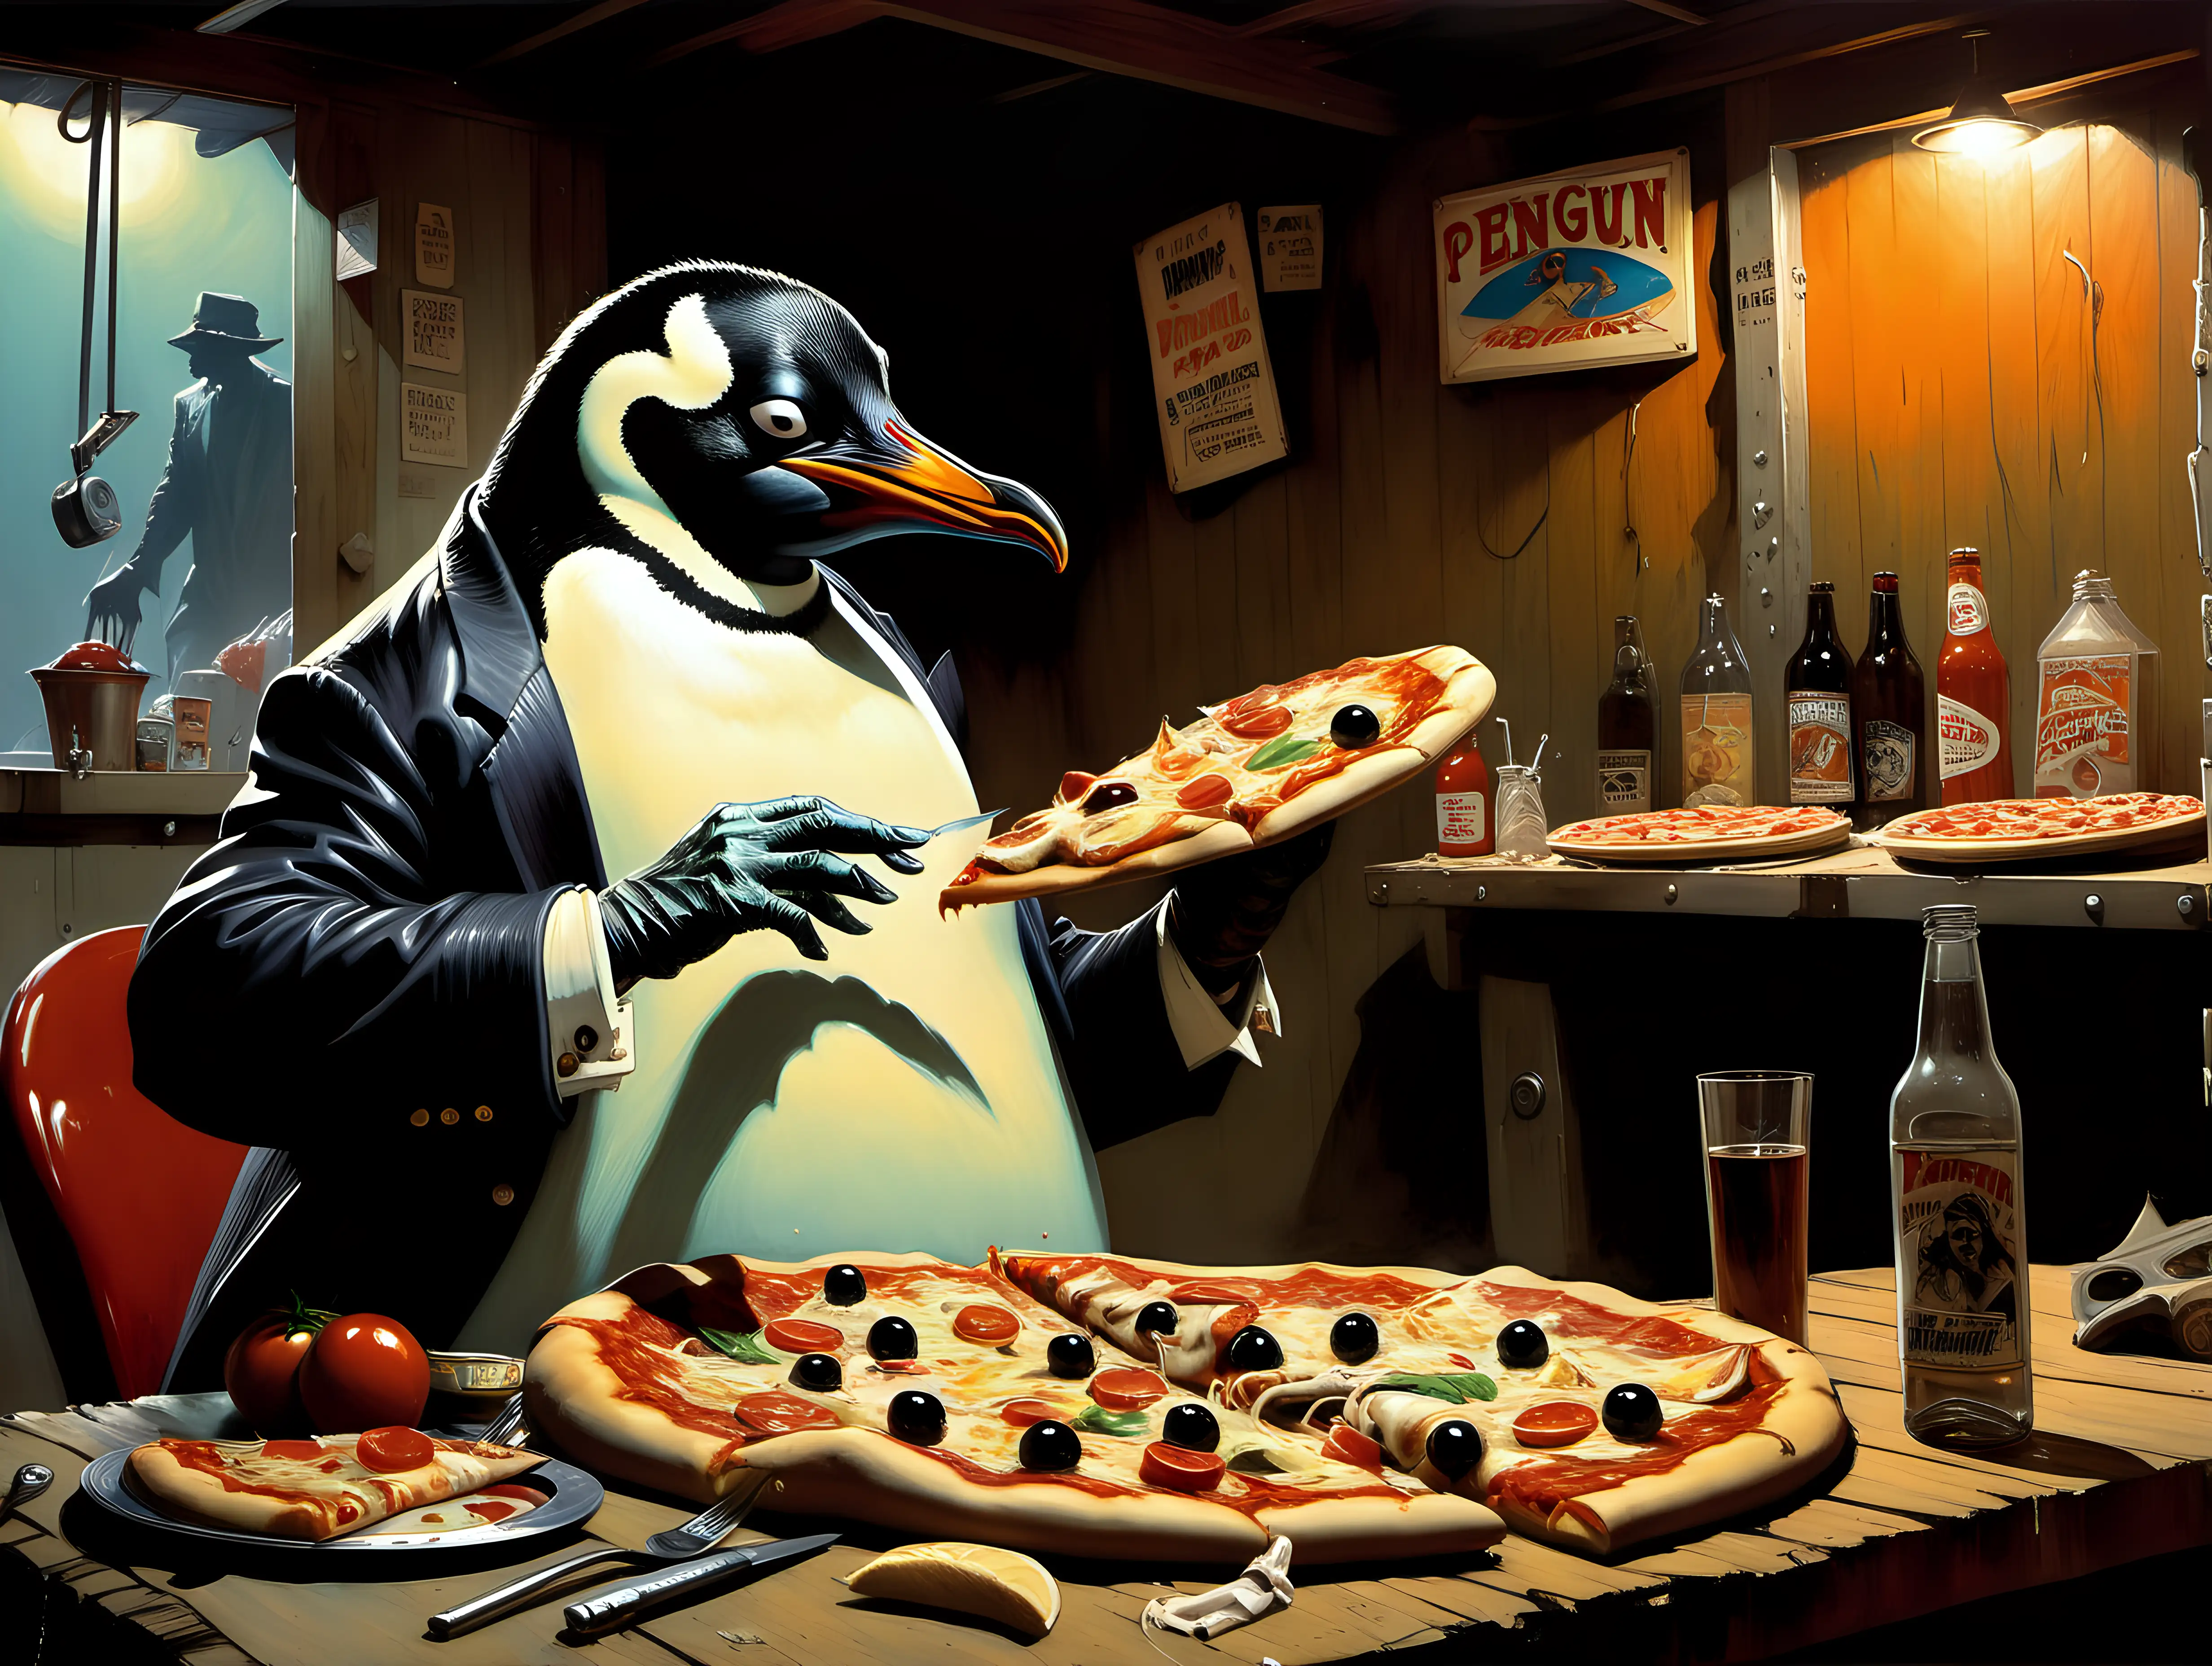 Penguin Indulging in Pizza Delights in a Vibrant Frank Frazetta Juke Joint Masterpiece